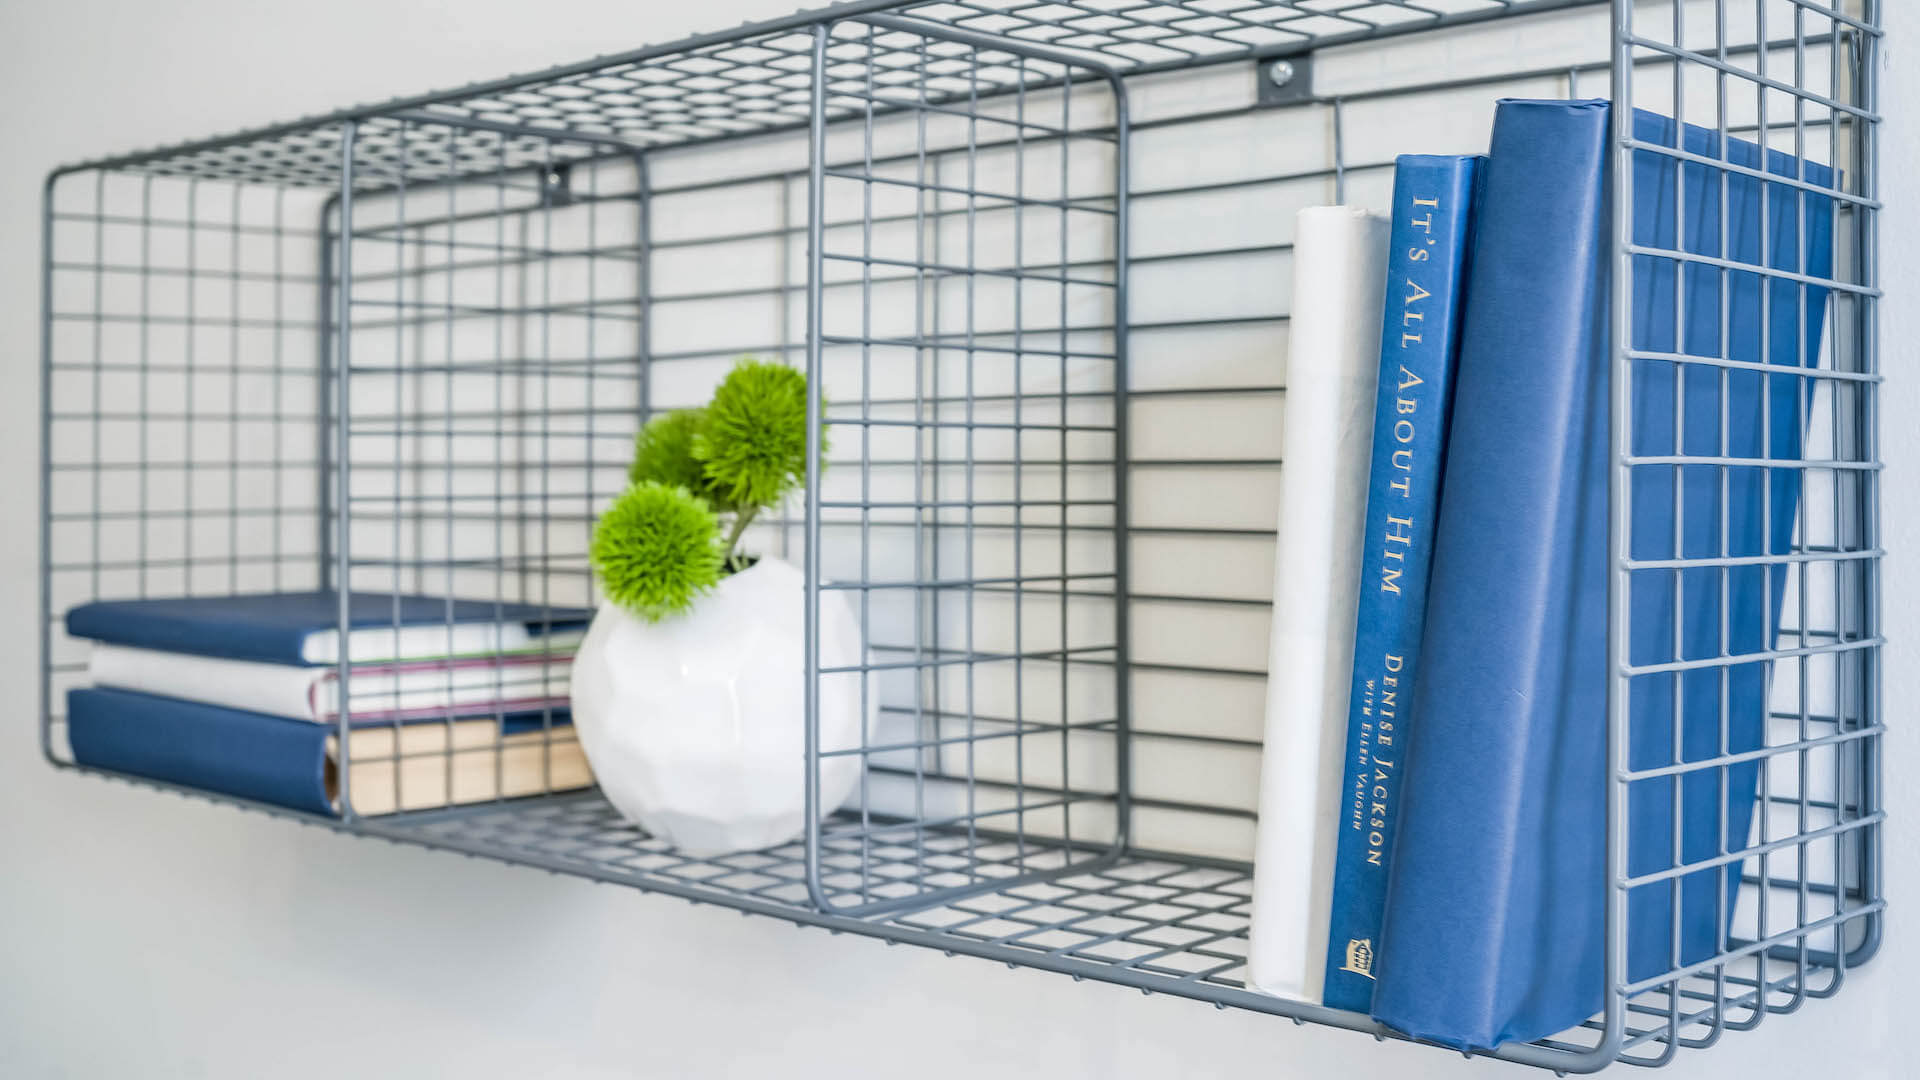 Bookshelf with tiny plant